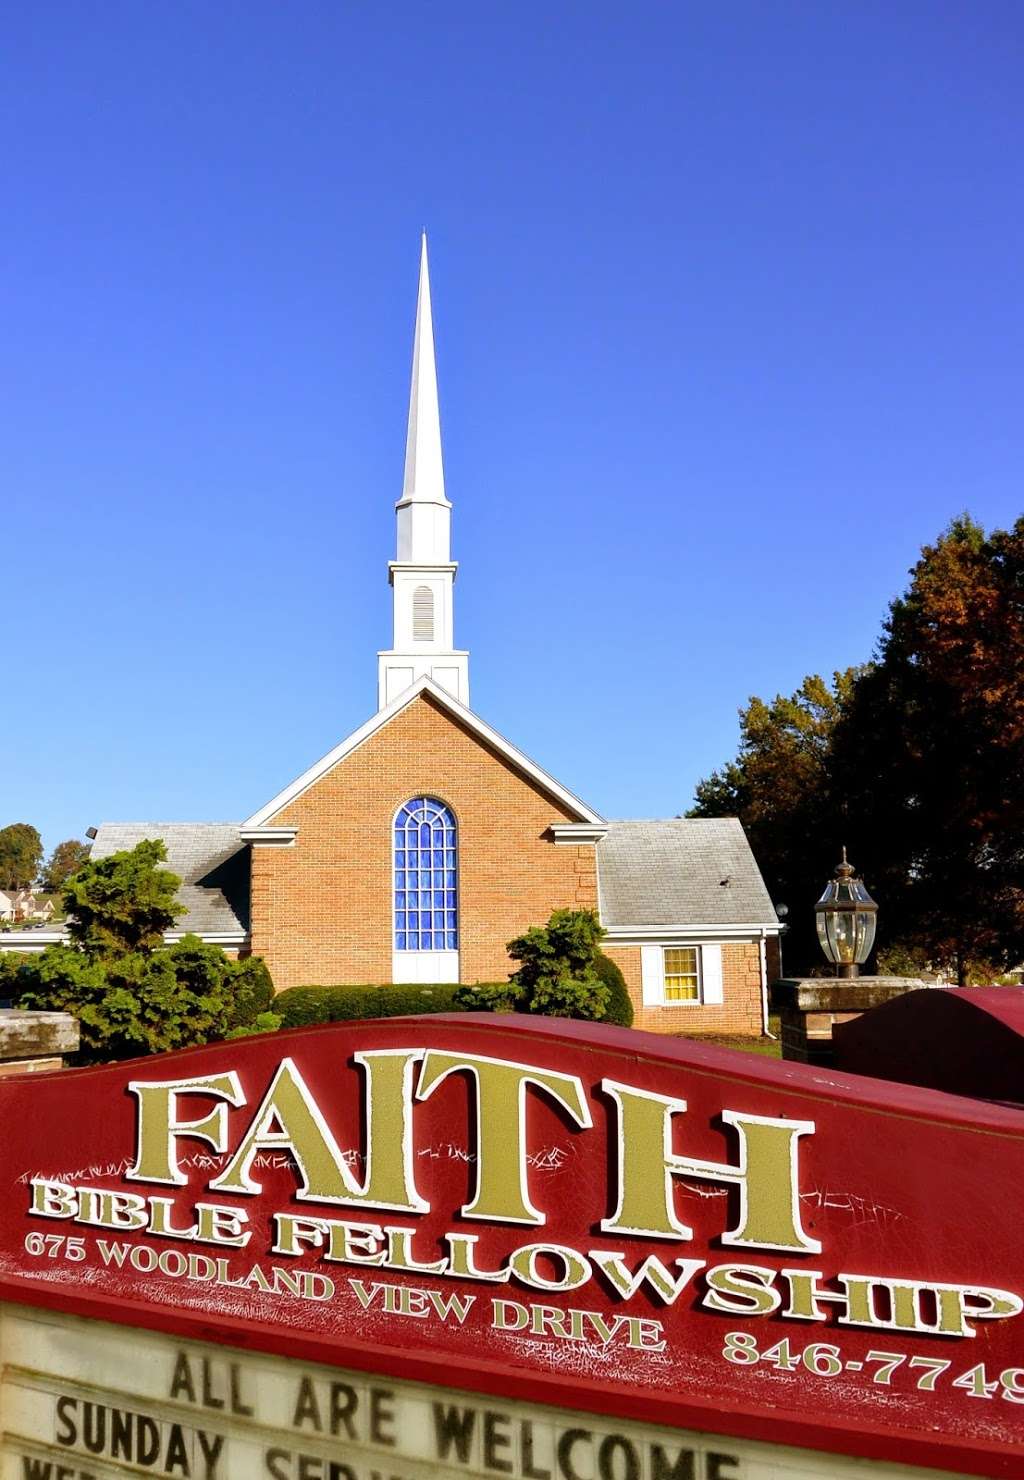 Faith Bible Fellowship Church | 675 Woodland View Dr, York, PA 17406, USA | Phone: (717) 846-7749